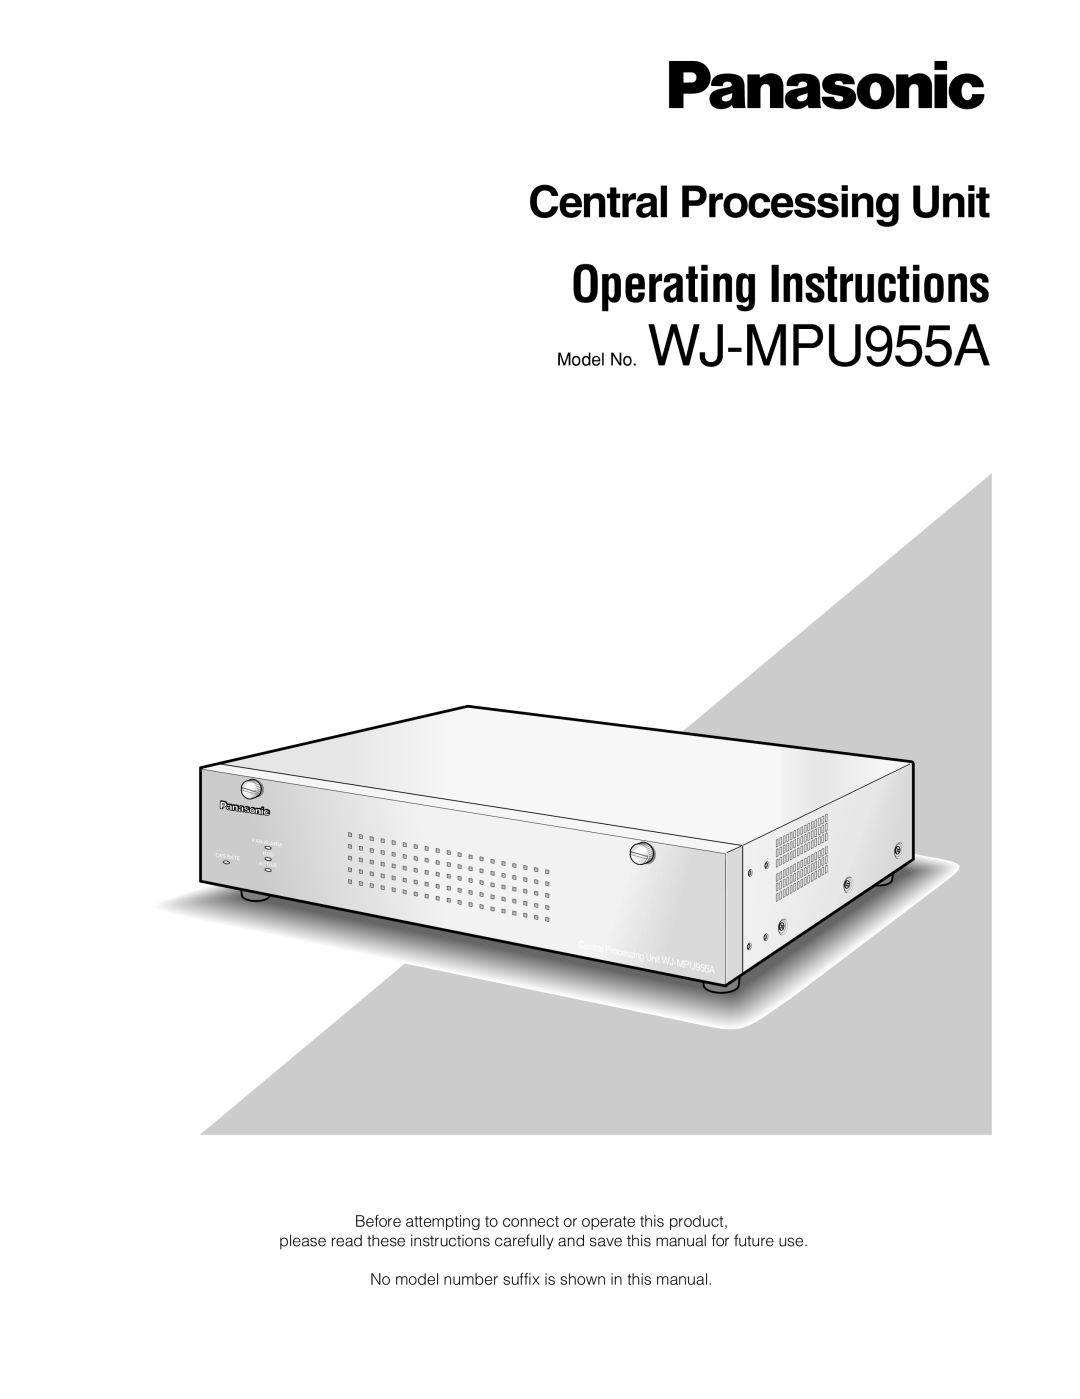 Panasonic manual Operating Instructions, Central Processing Unit, Model No. WJ-MPU955A 